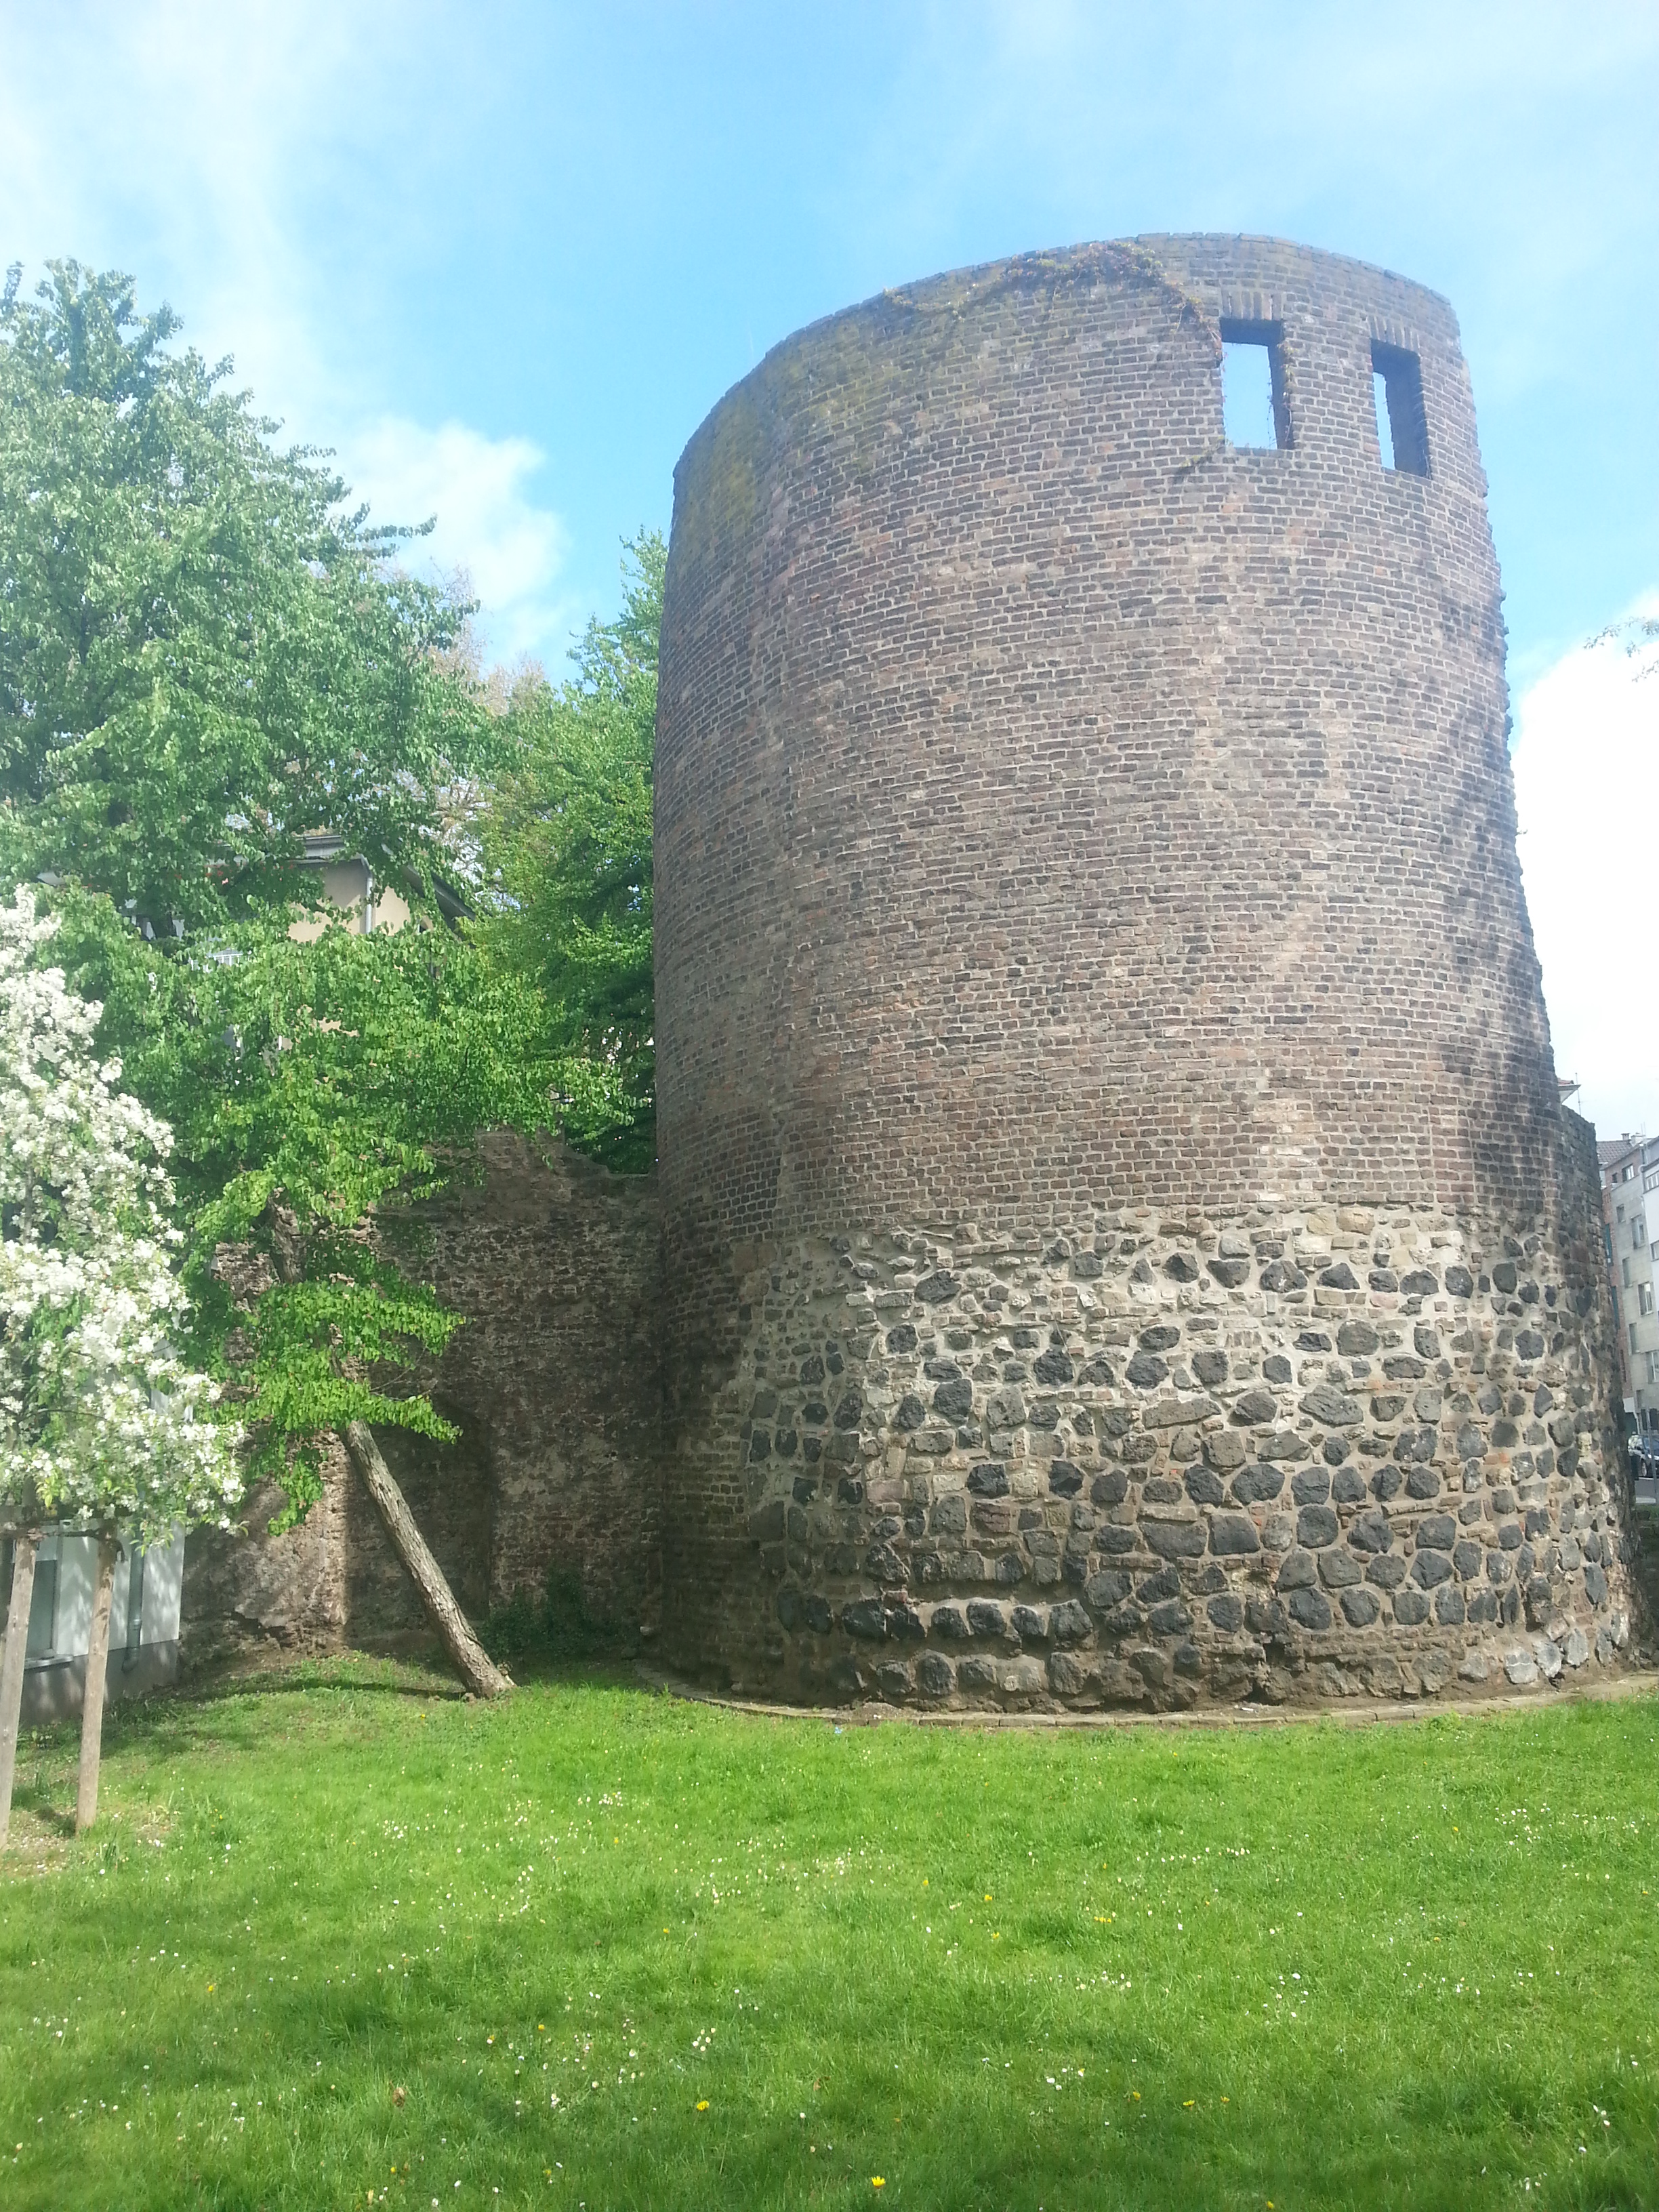 The best surviving Roman Tower